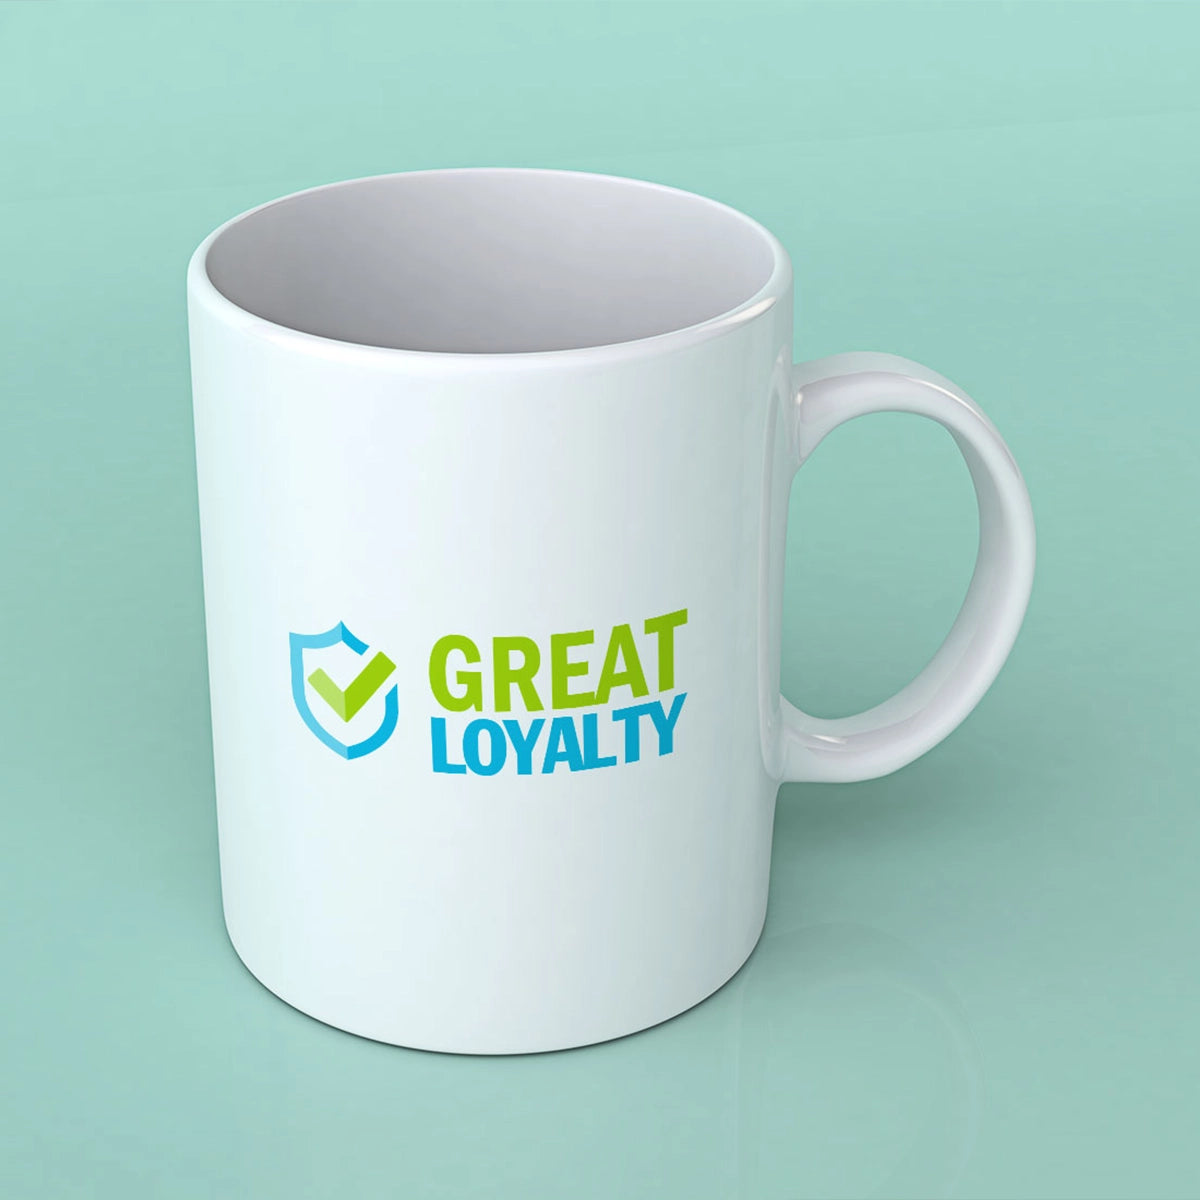 greatloyalty.com